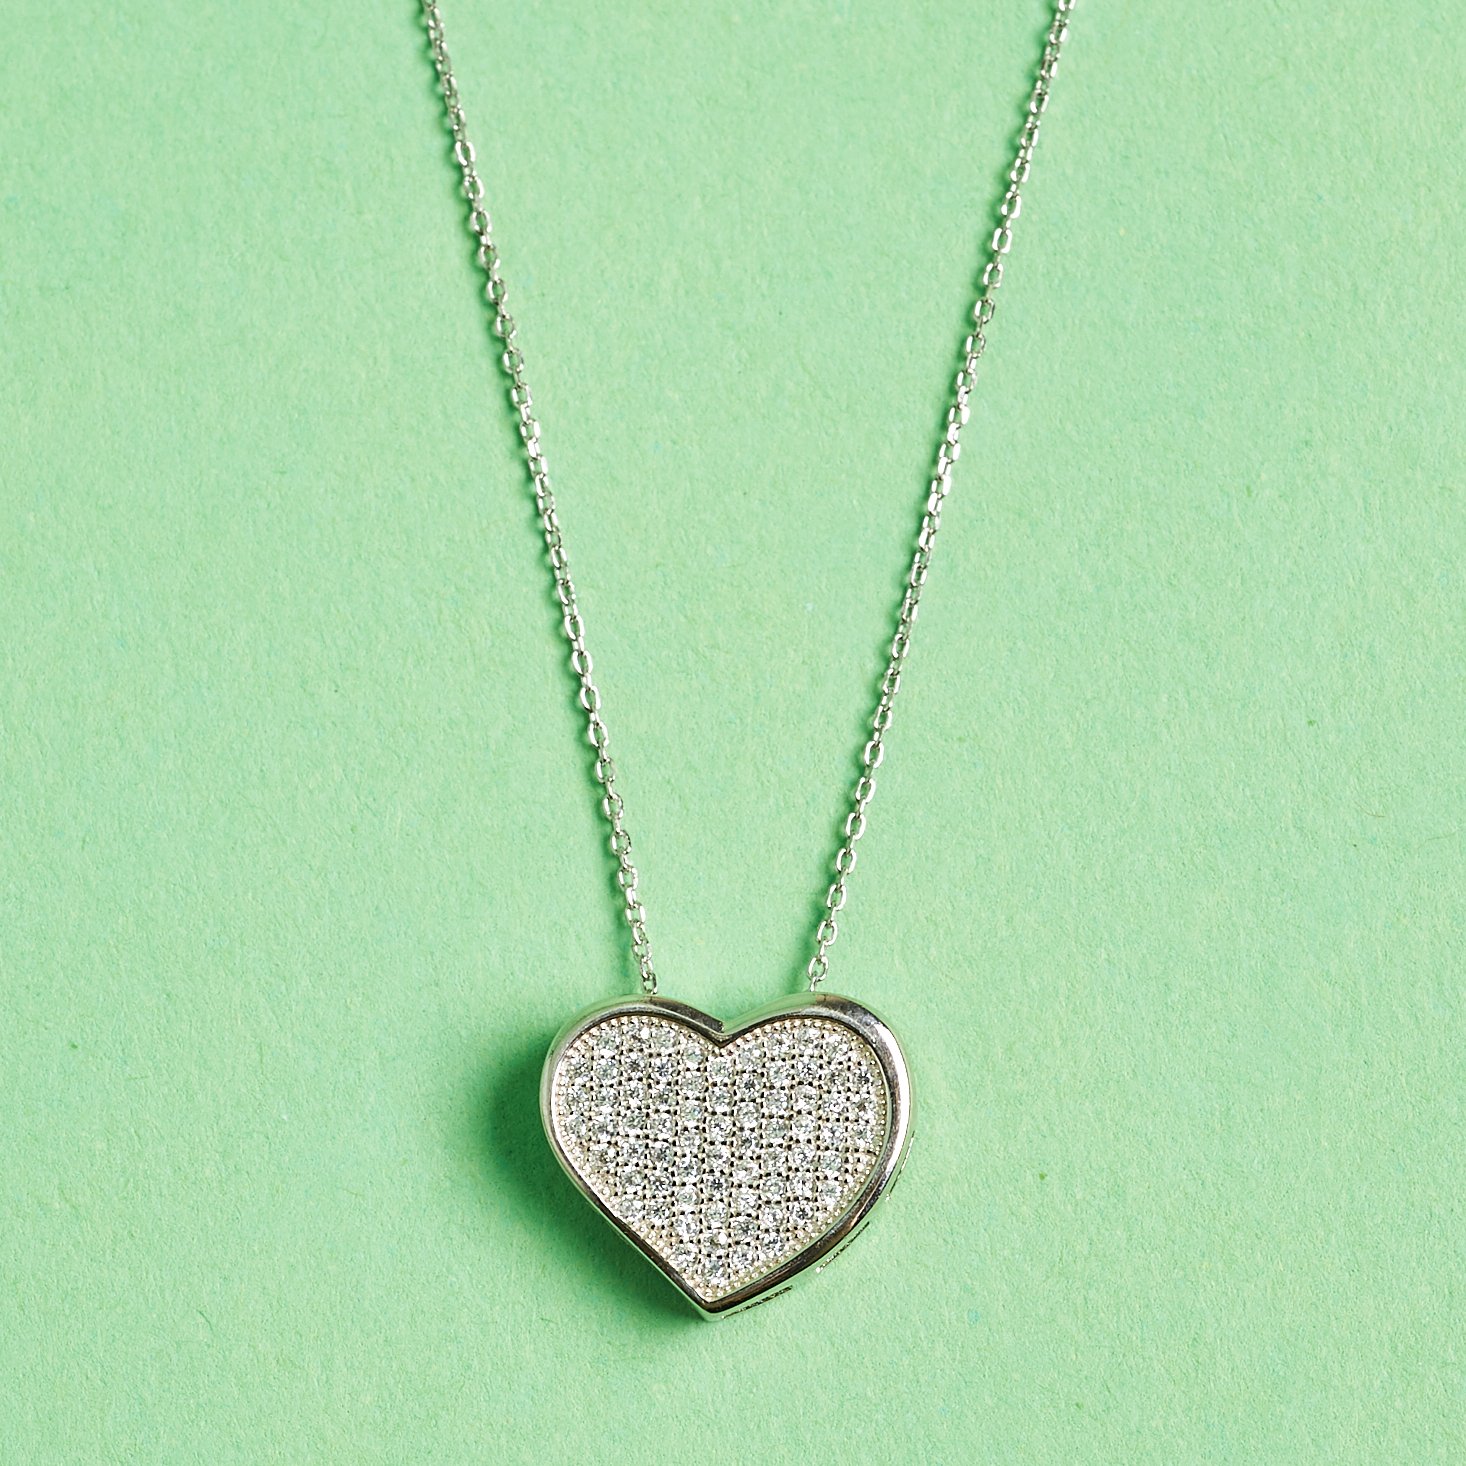 closeup shot of heart pendant